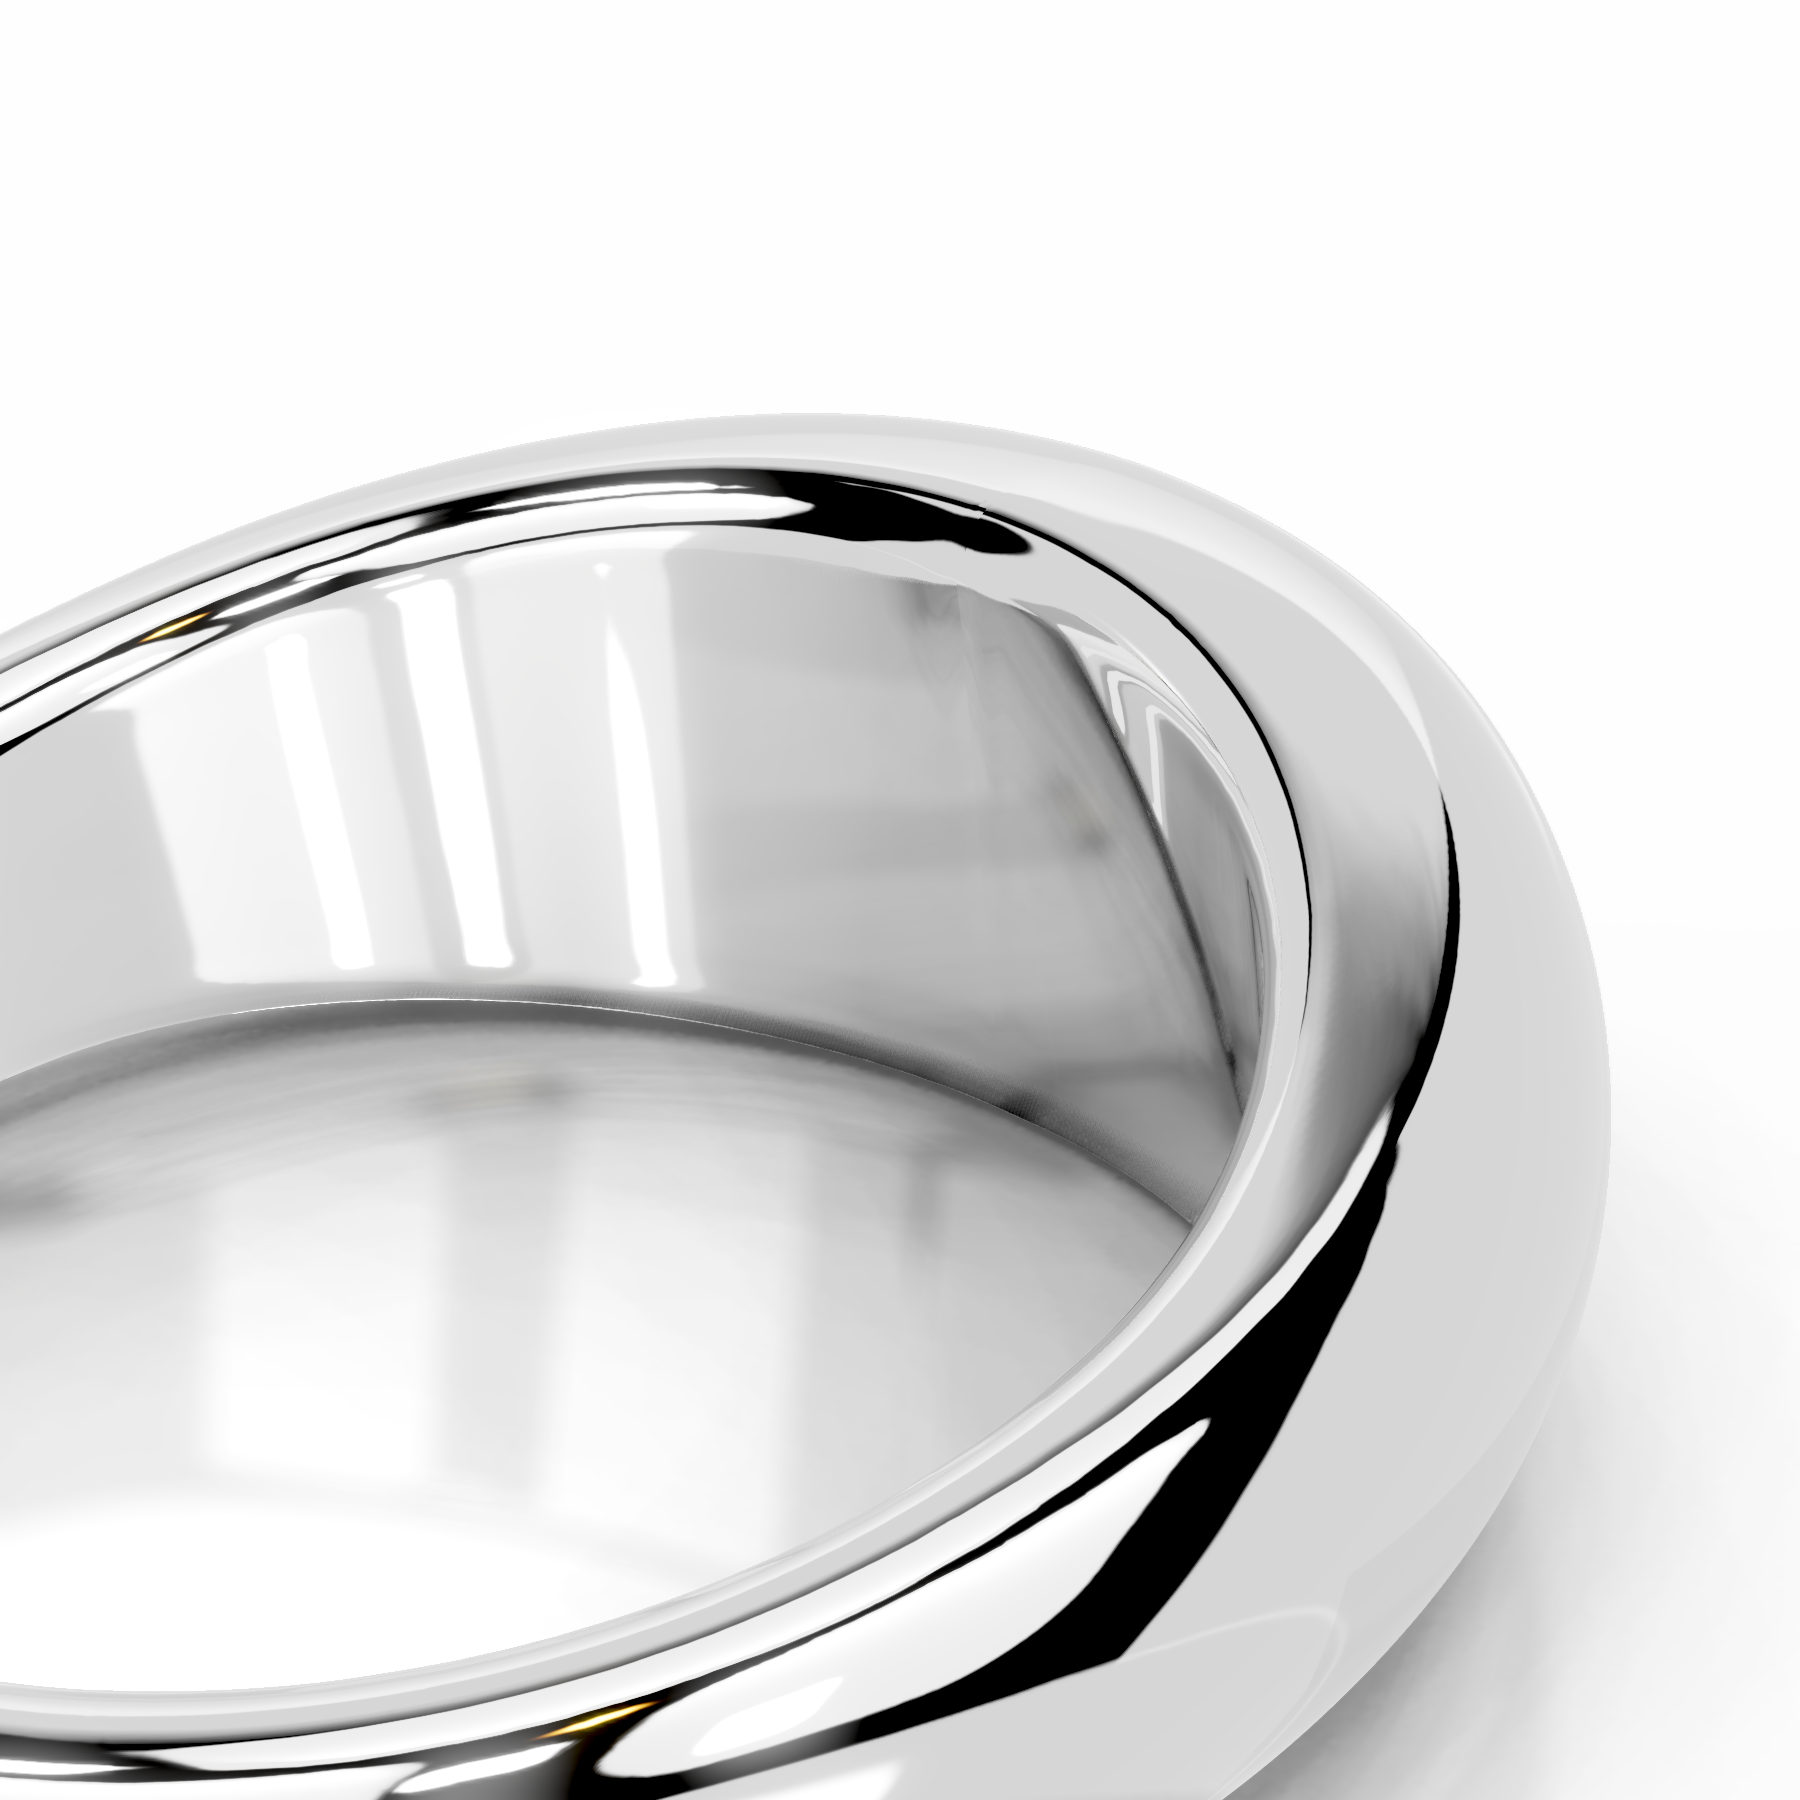 Jayla Diamond Engagement Ring   (1 Carat) -Platinum